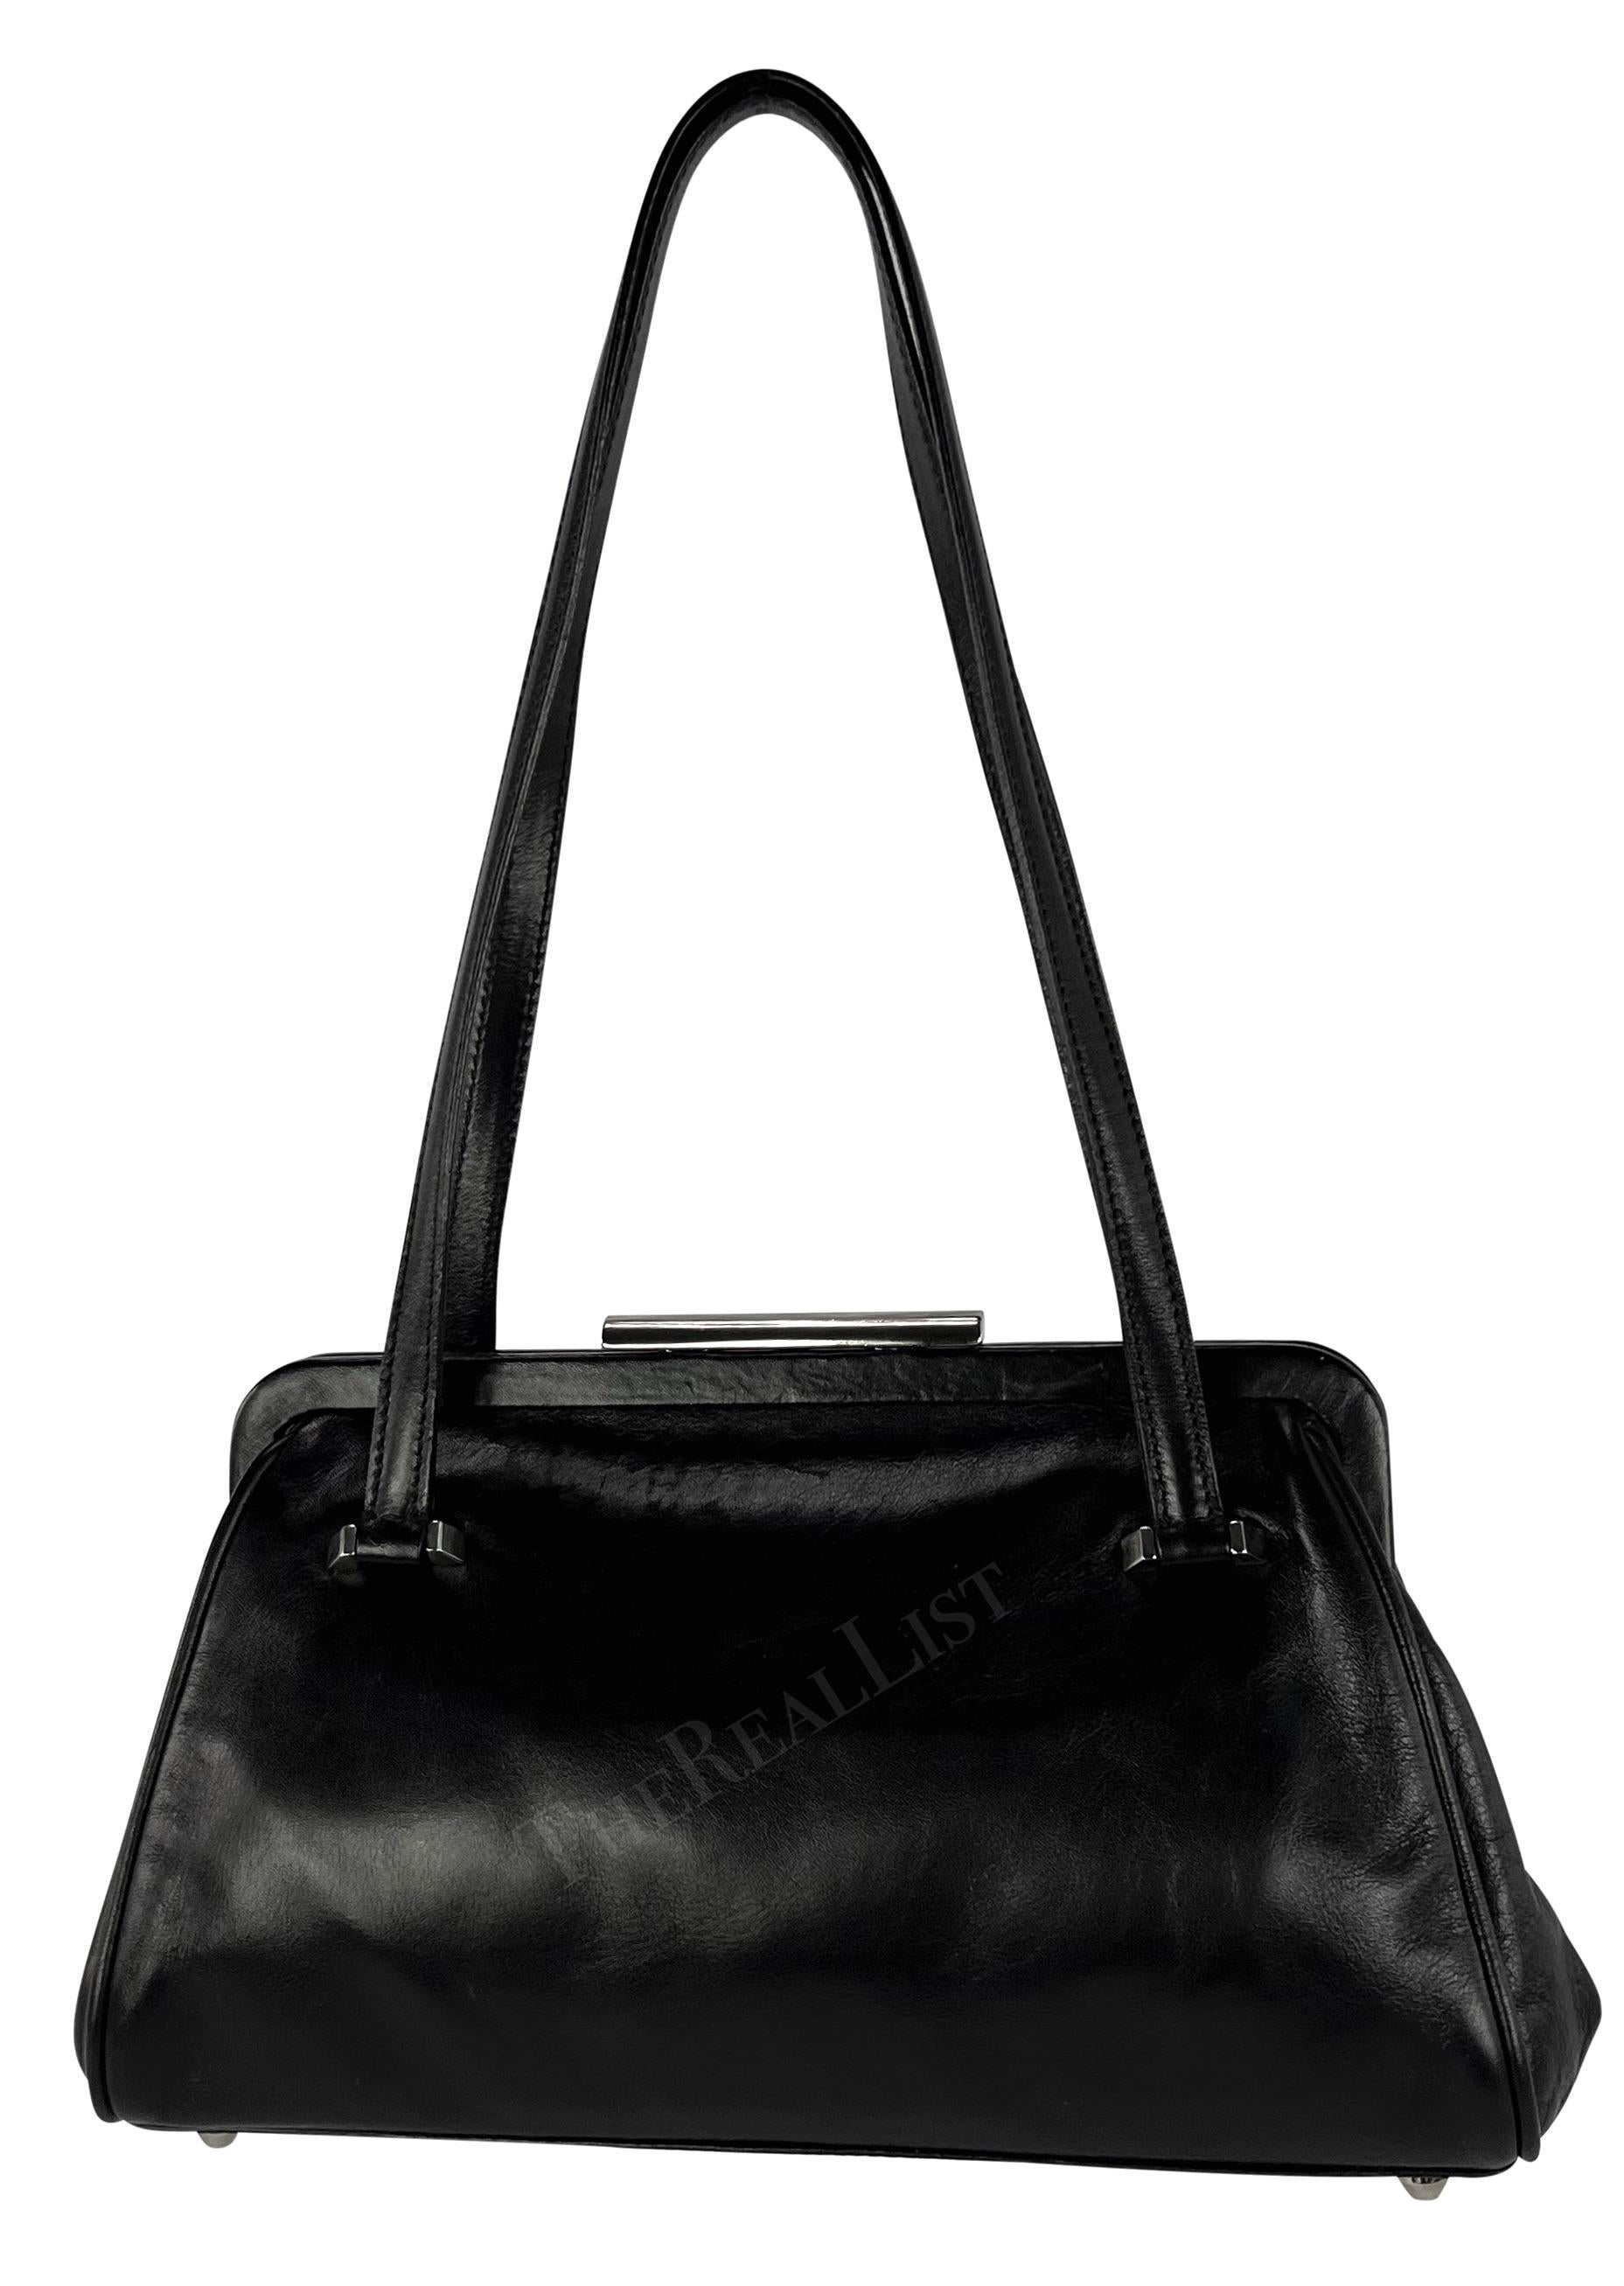 S/S 2003 Dolce & Gabbana 'Sex & Love' Black Leather Mini Shoulder Bag 1